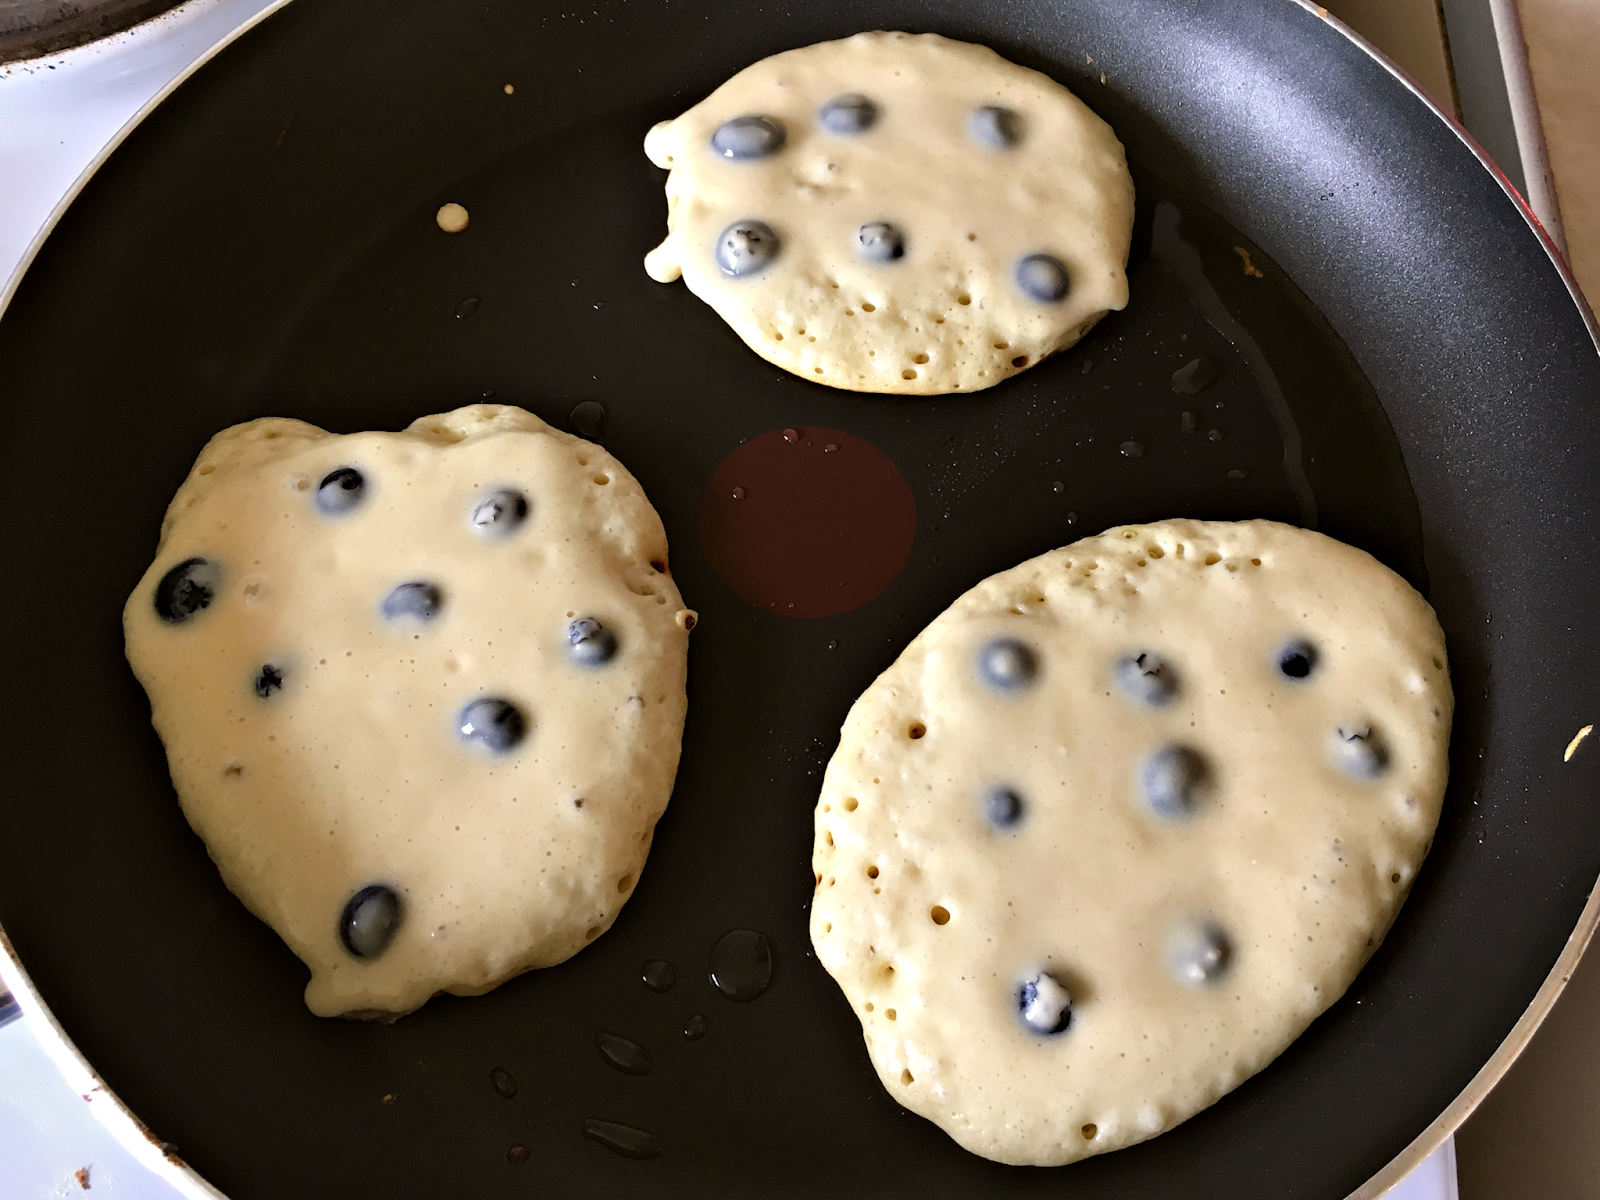 Fluffy Vegan Blueberry Pancakes